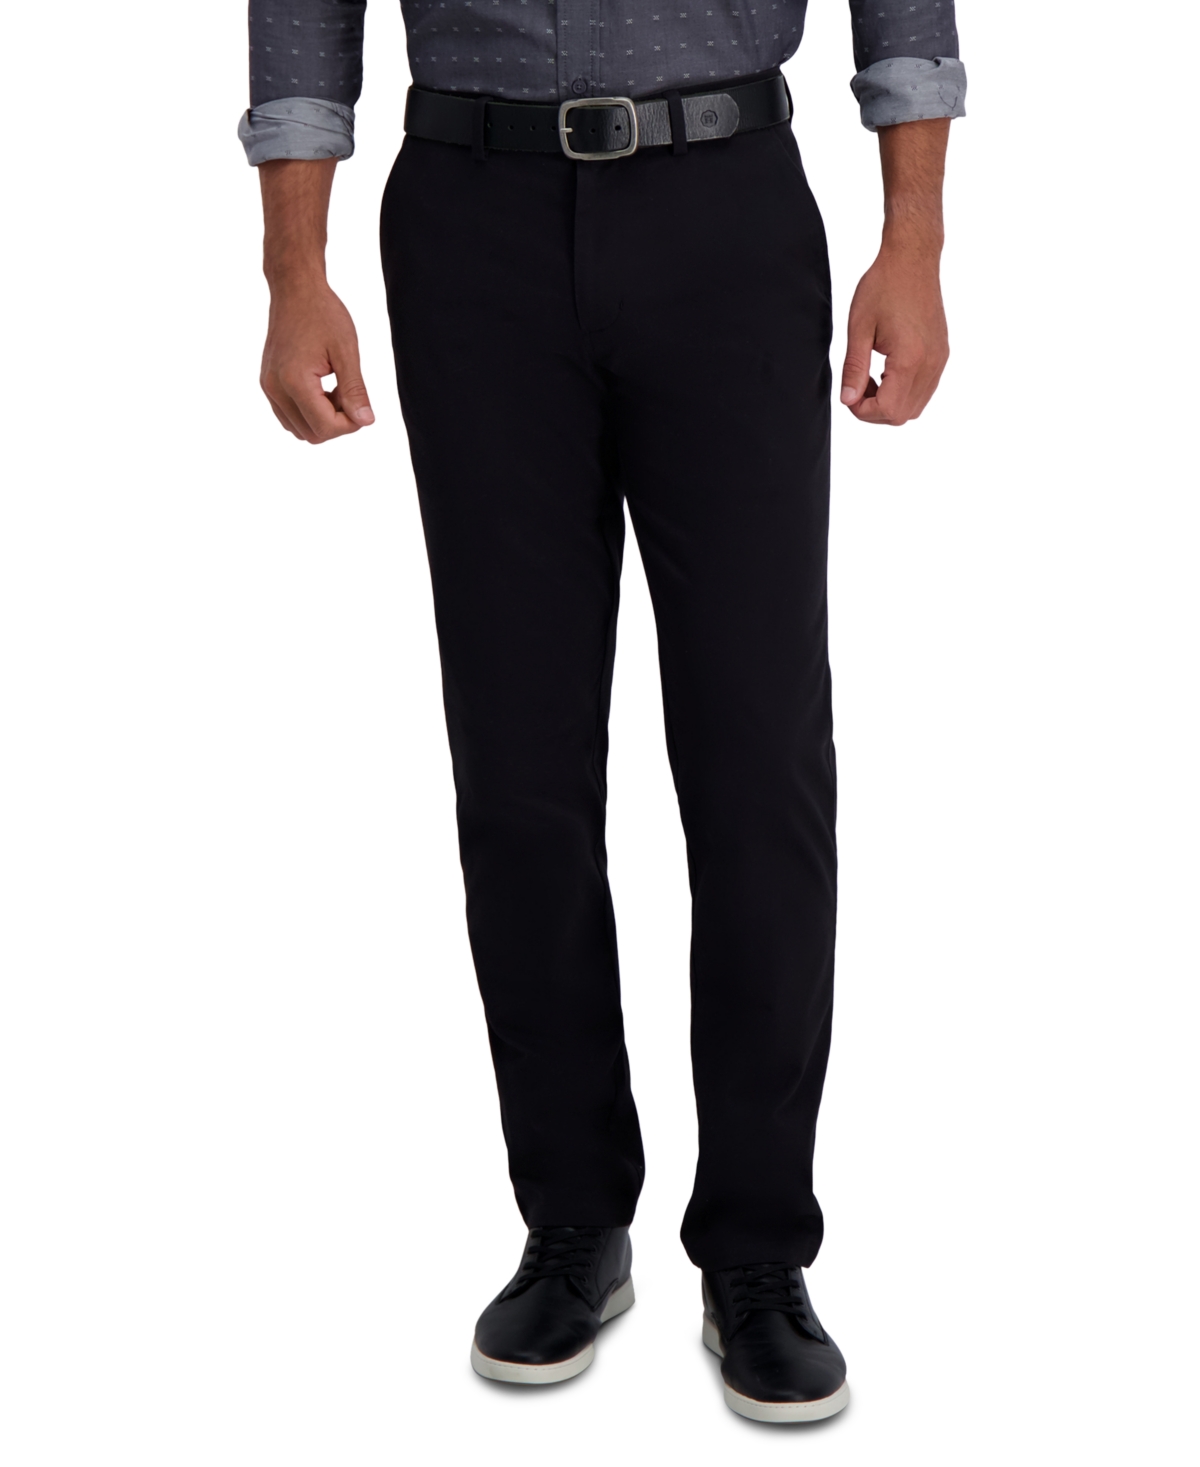 Men's Slim-Fit Motion Khaki Straight Flex Waistband Casual Pants - Black